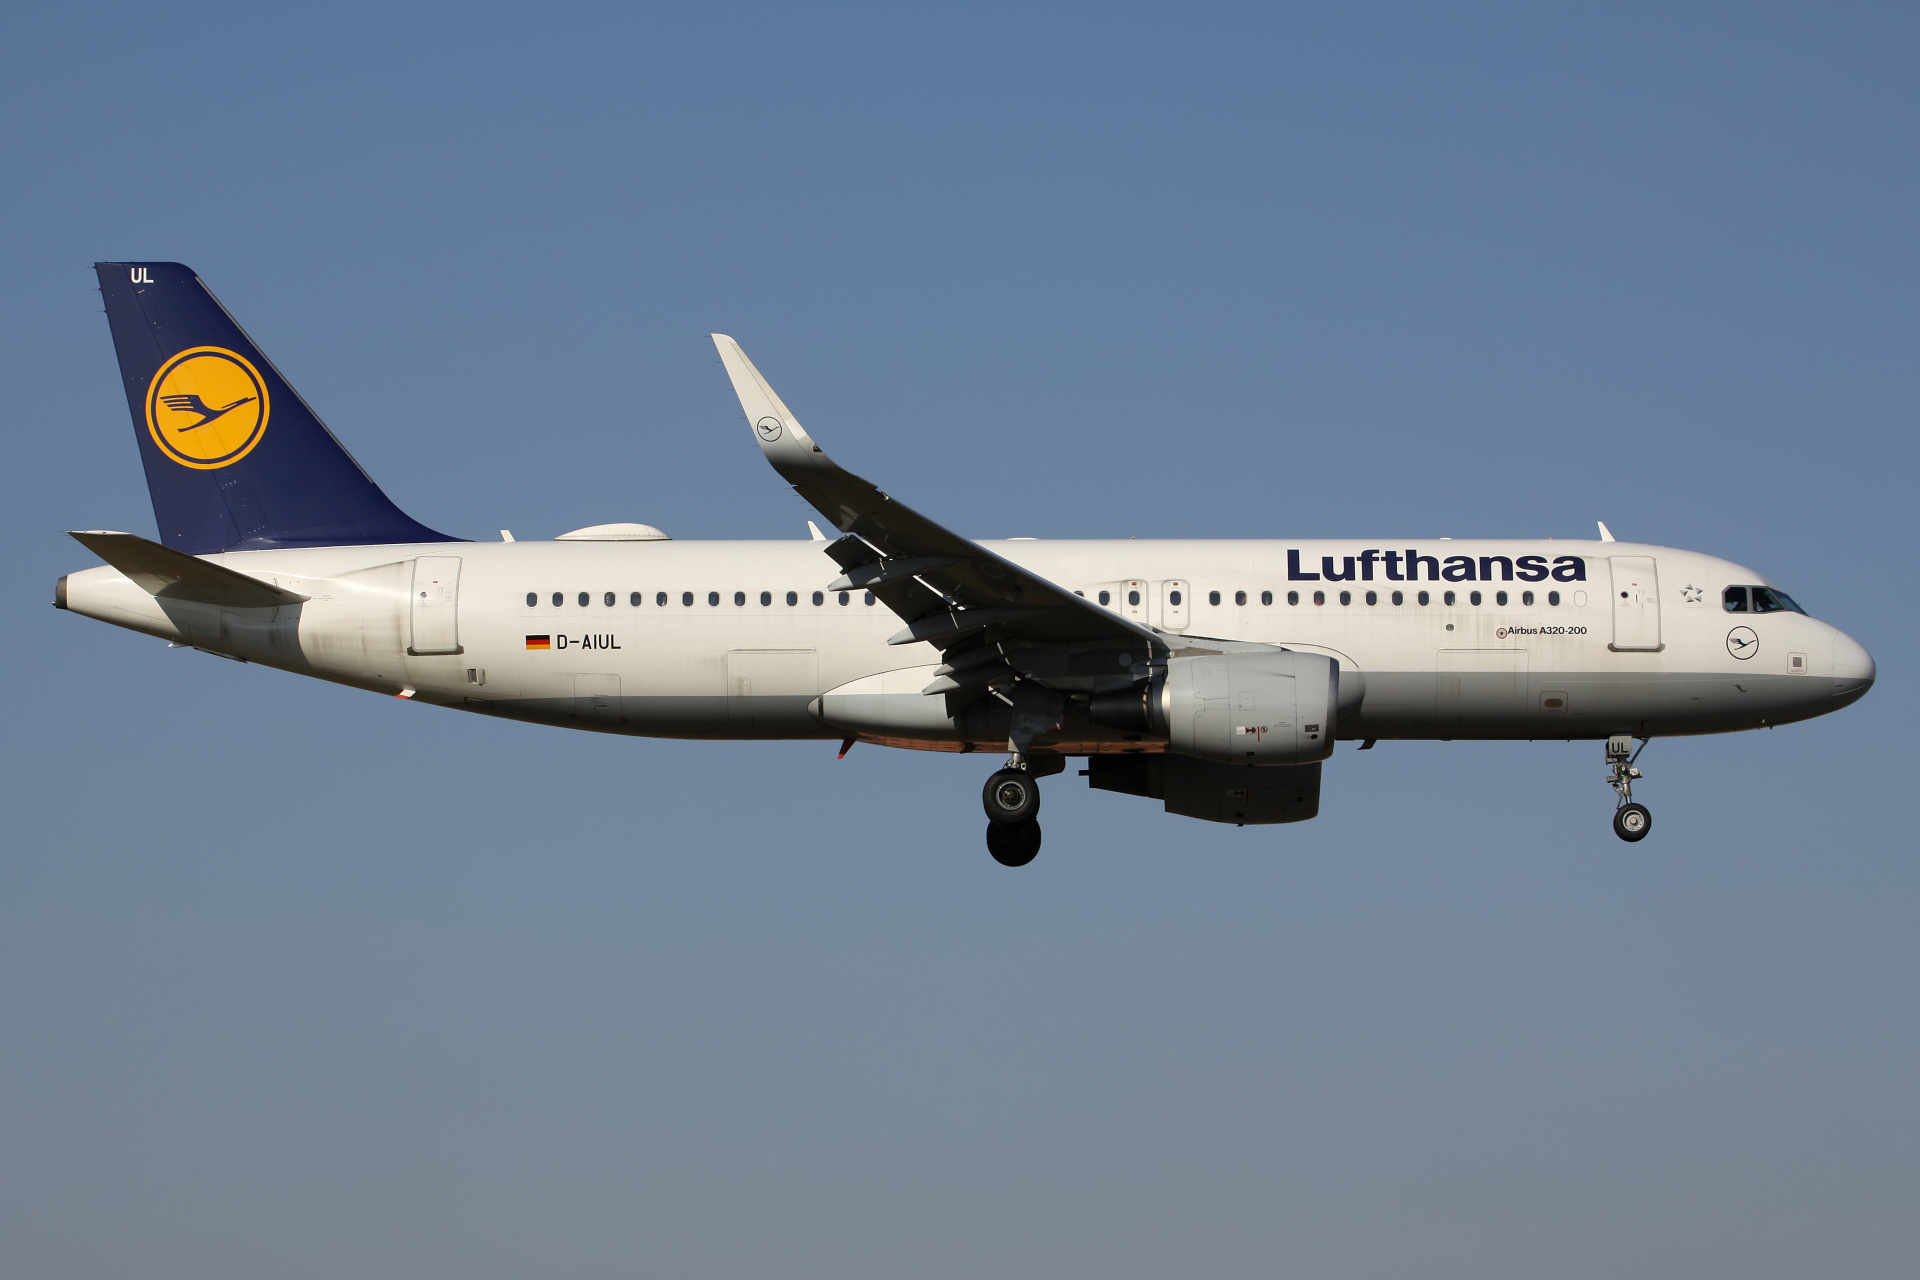 D-AIUL (Aircraft » EPWA Spotting » Airbus A320-200 » Lufthansa)